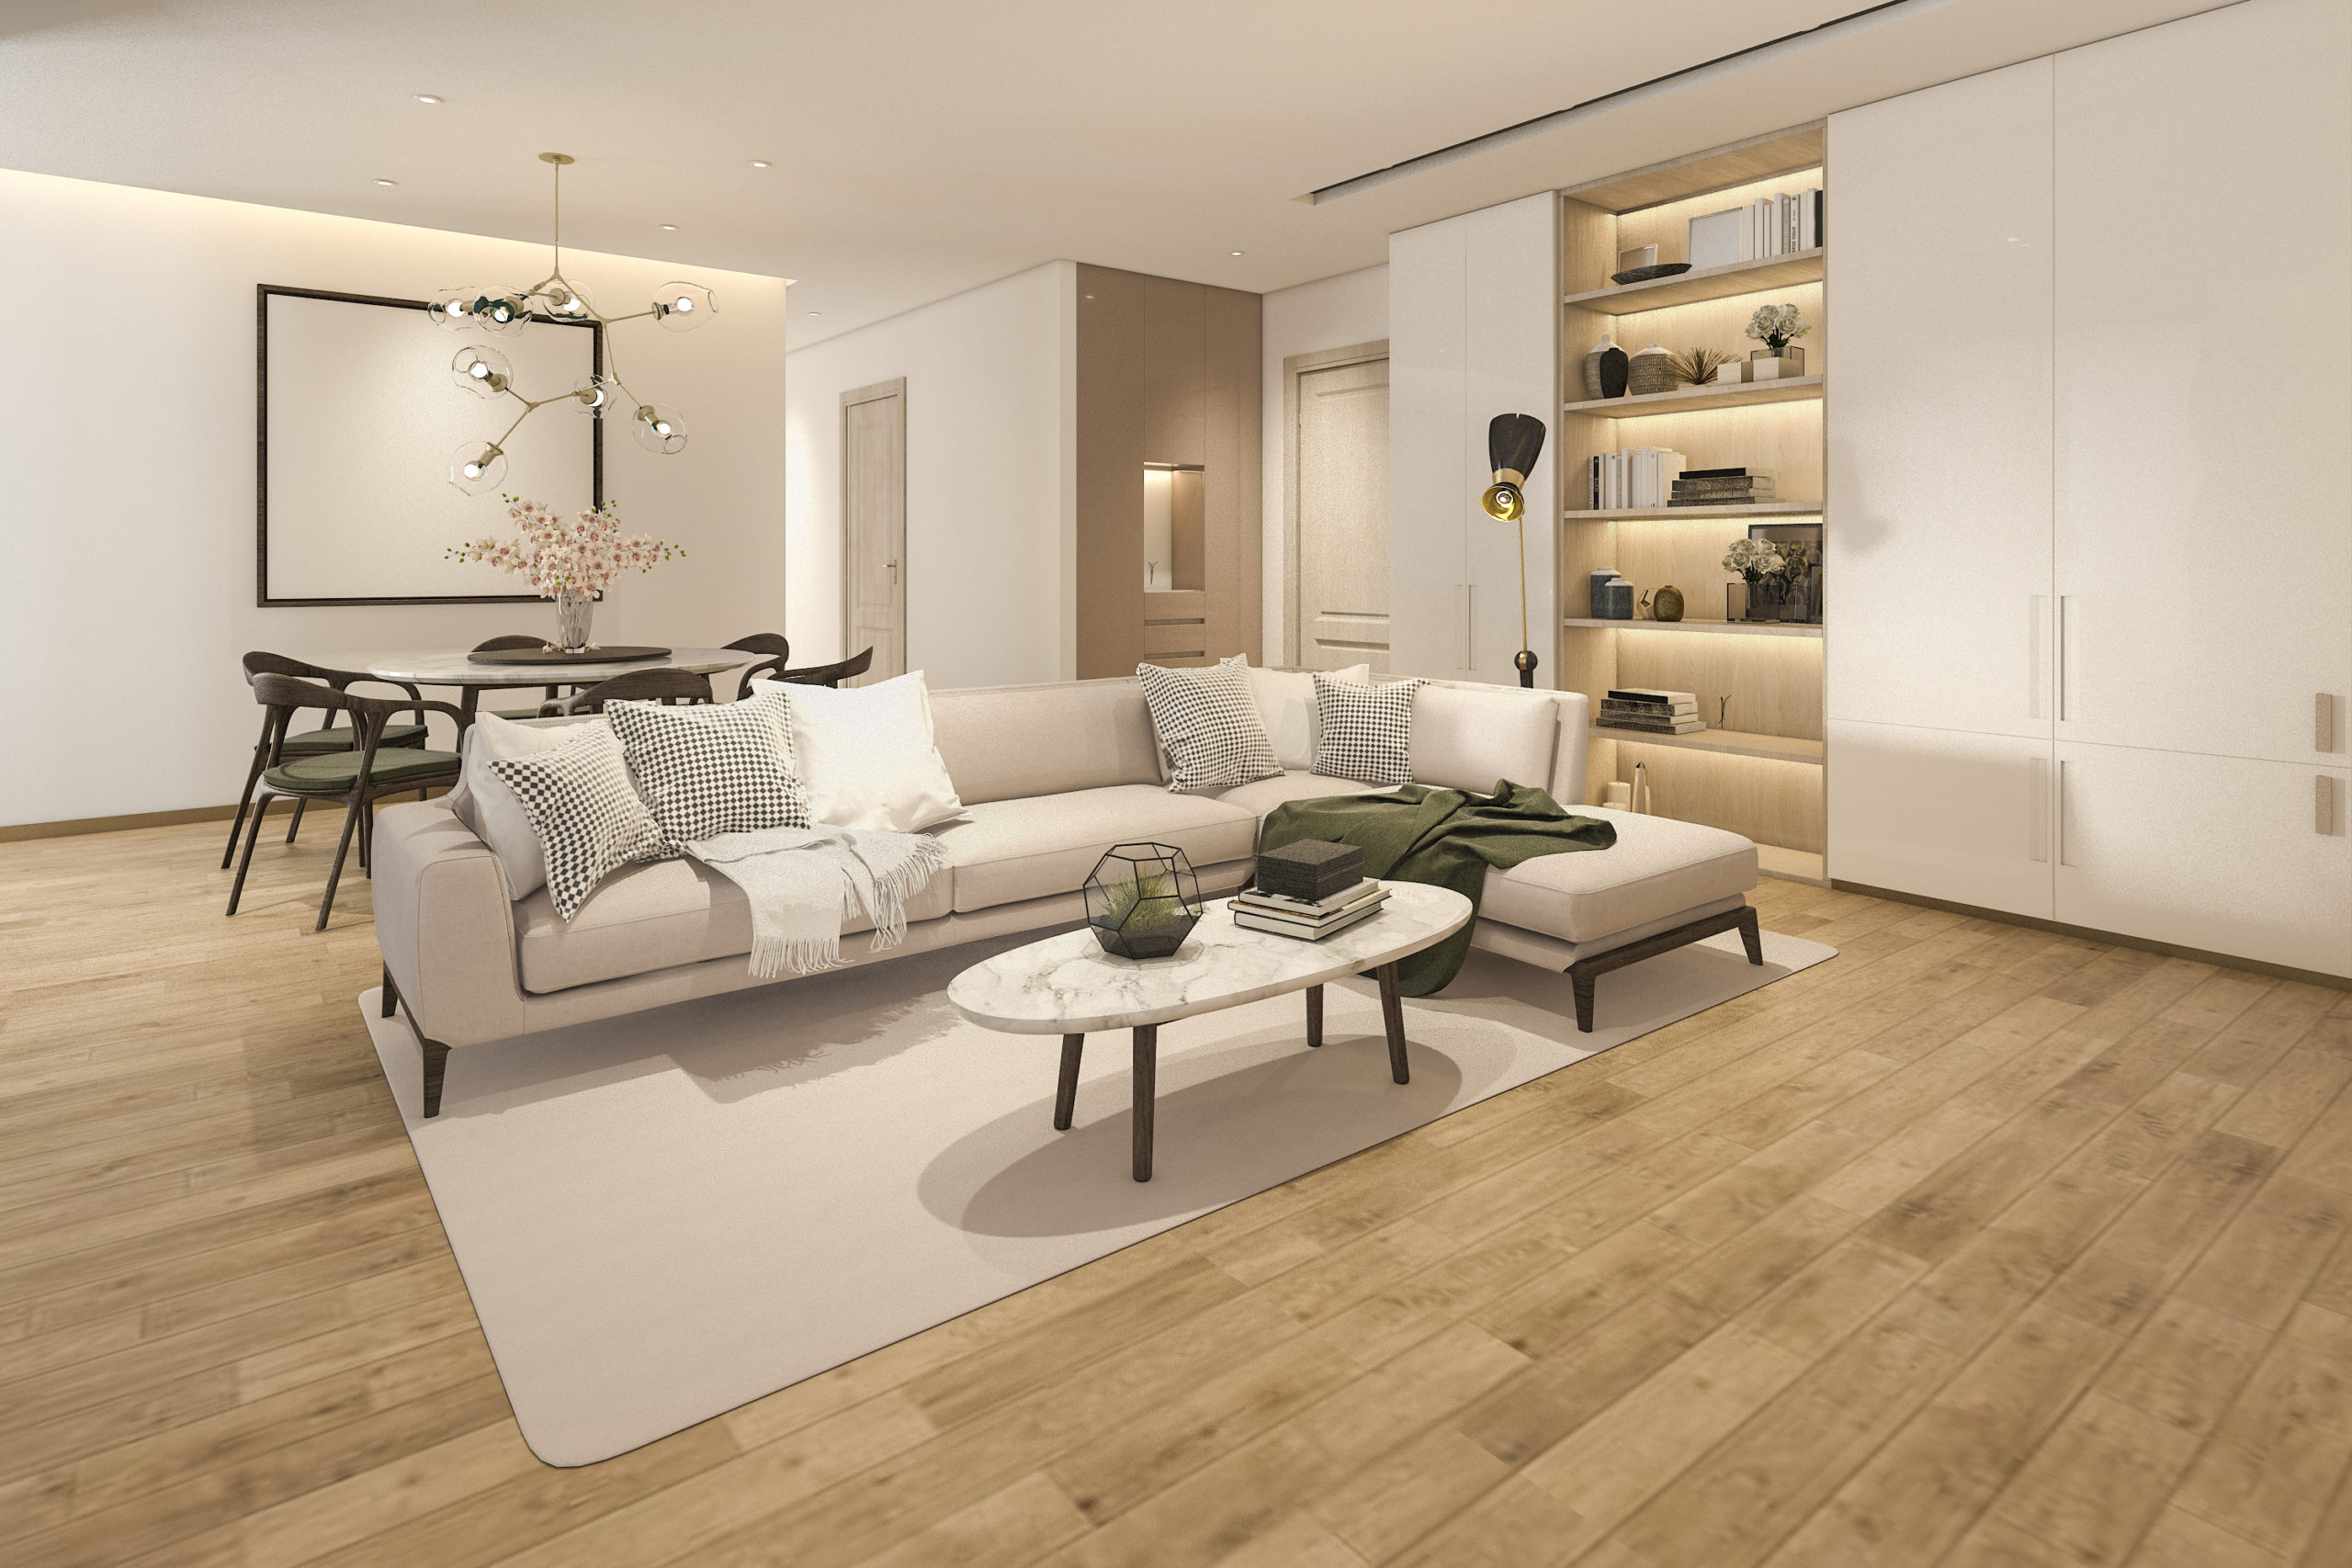 Hardwood Flooring Increase Home Value